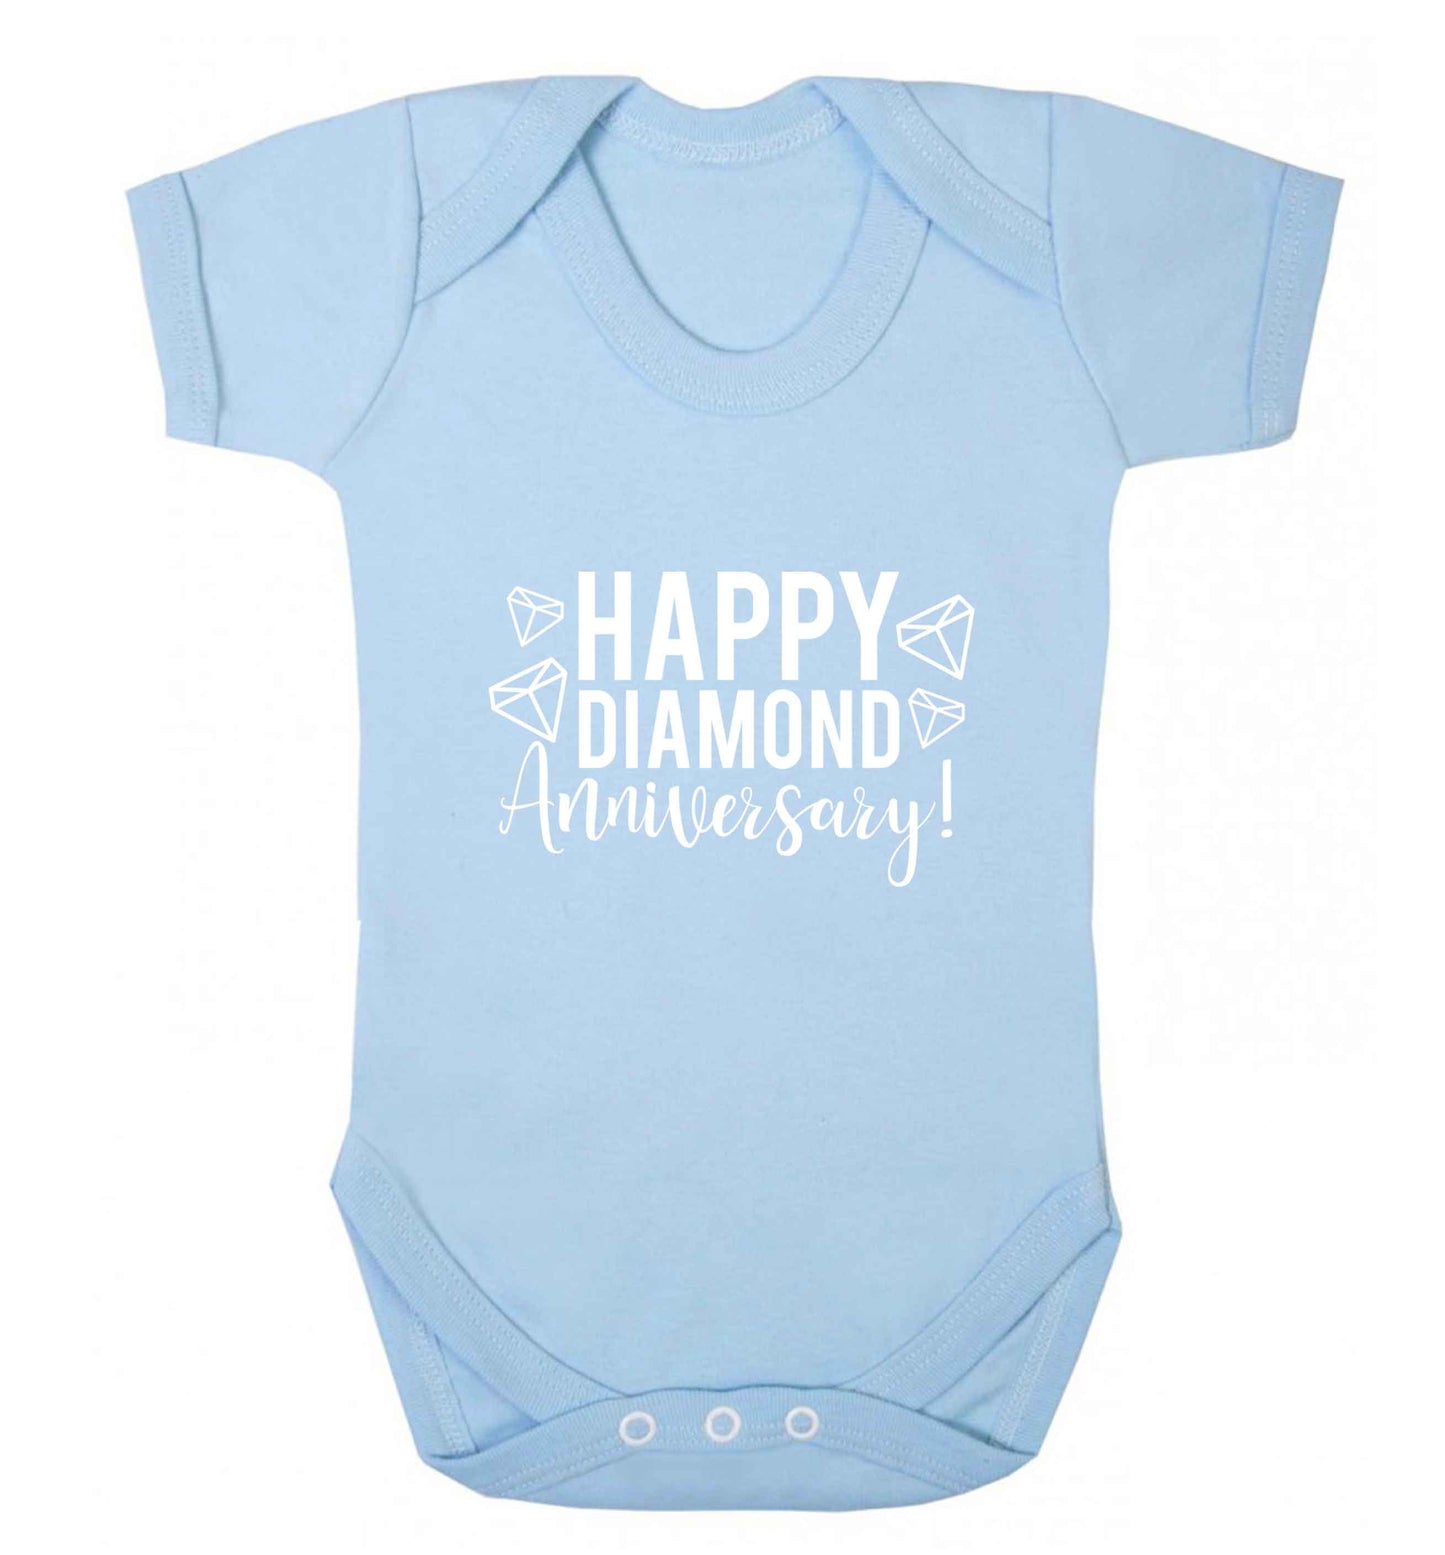 Happy diamond anniversary! baby vest pale blue 18-24 months